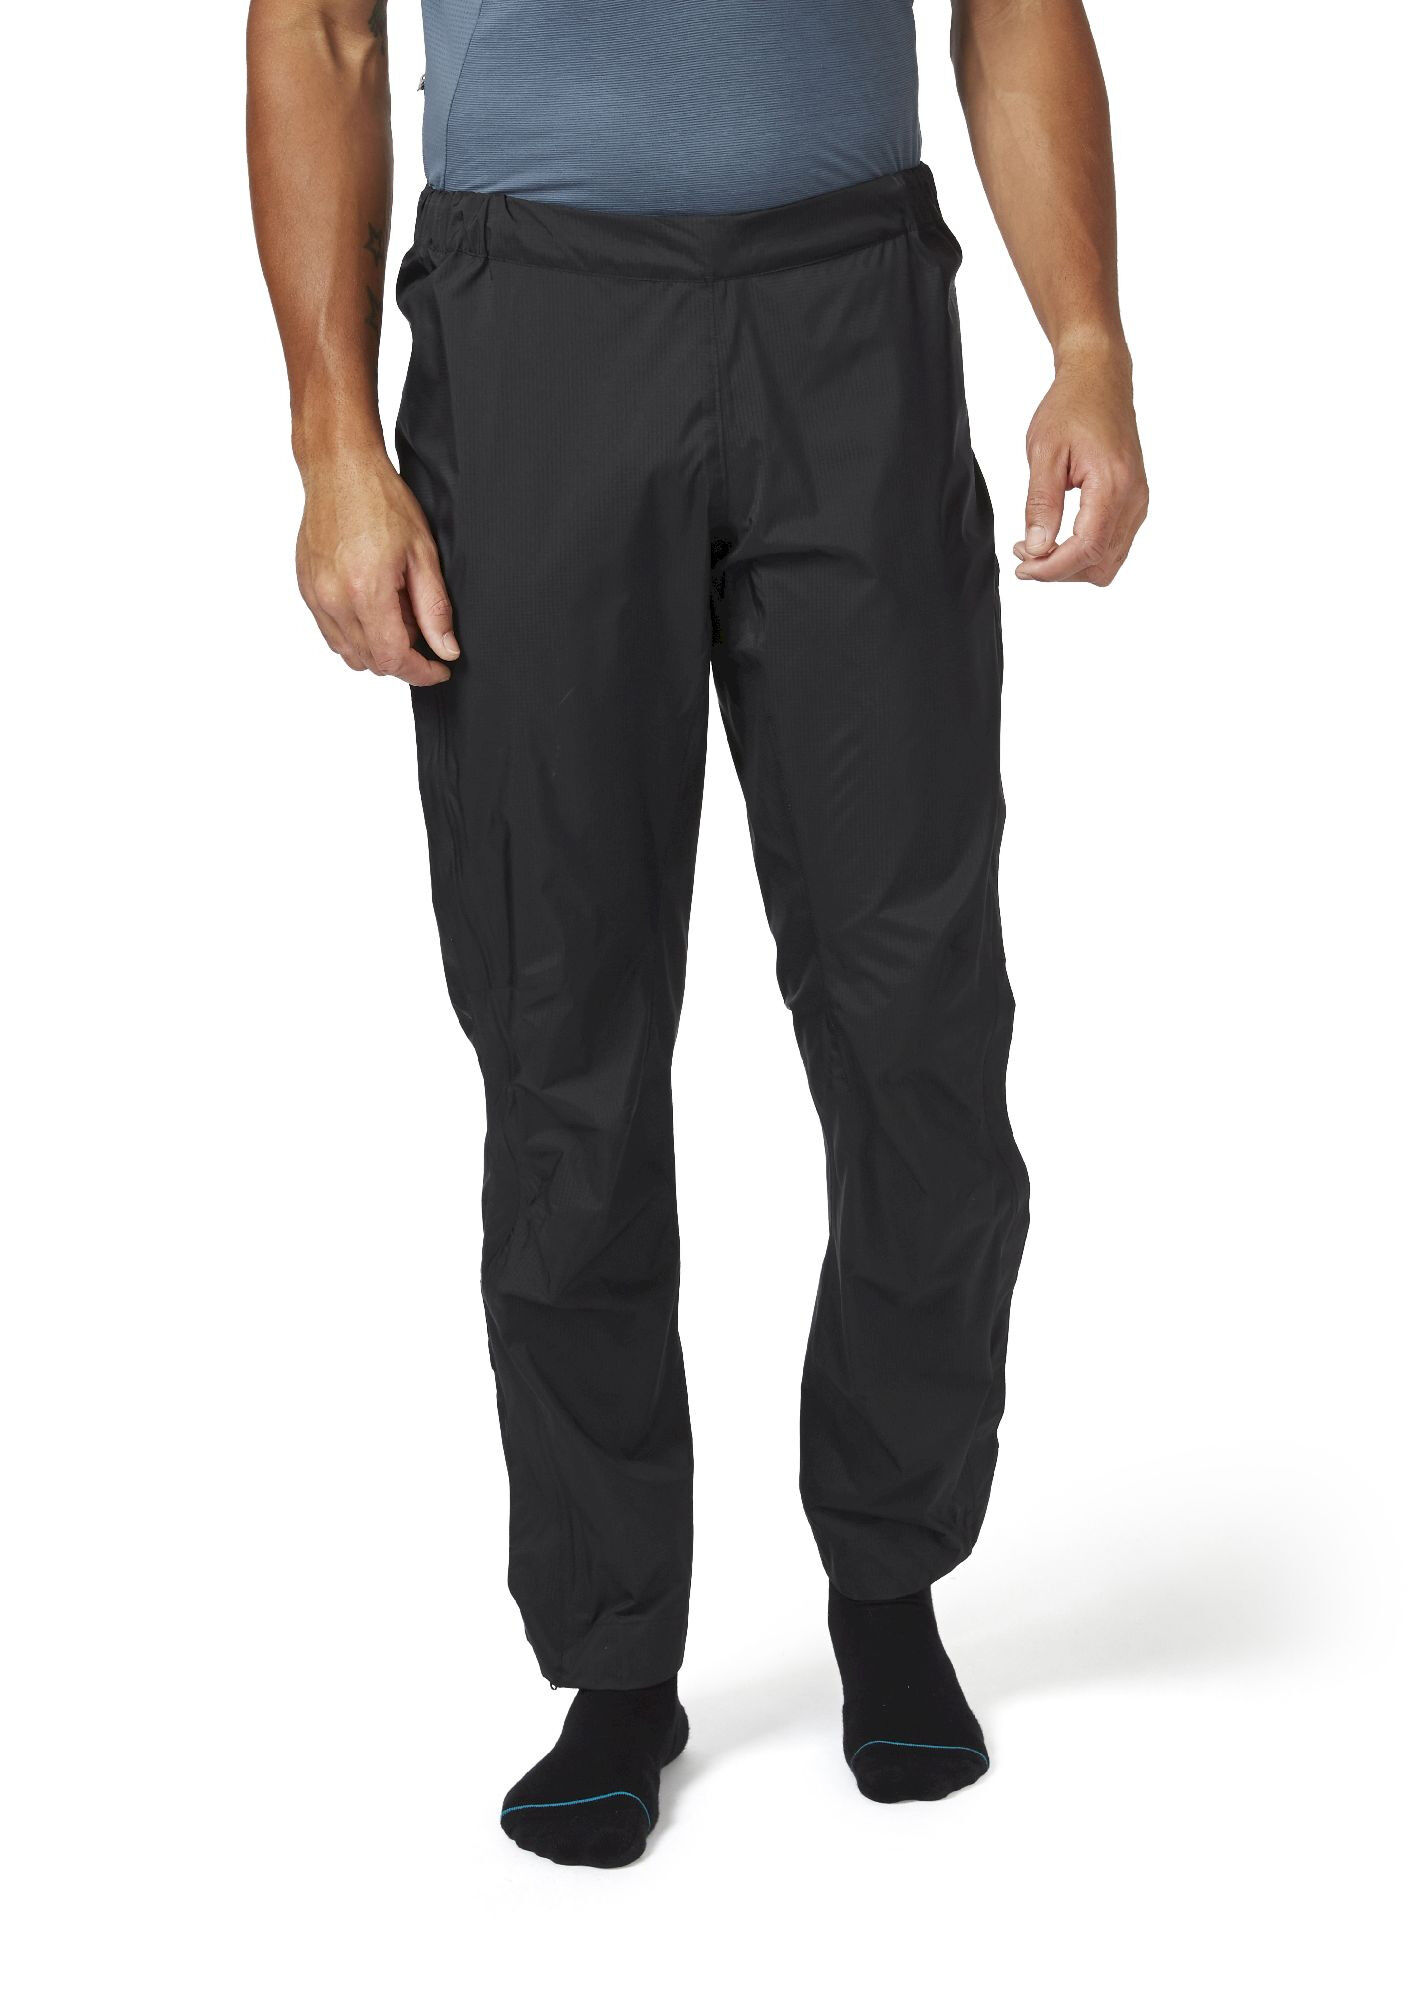 Rab Cinder Downpour Pants - Pantalones impermeables para ciclismo - Hombre | Hardloop